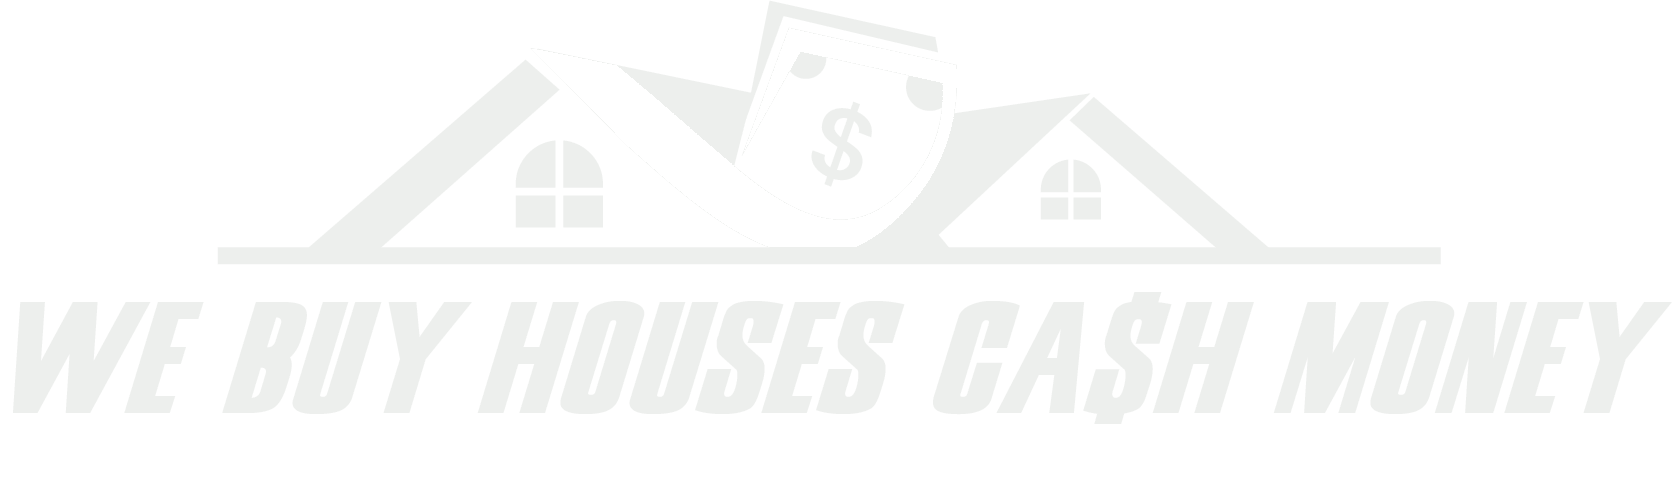 We Buy Houses Cash Money 